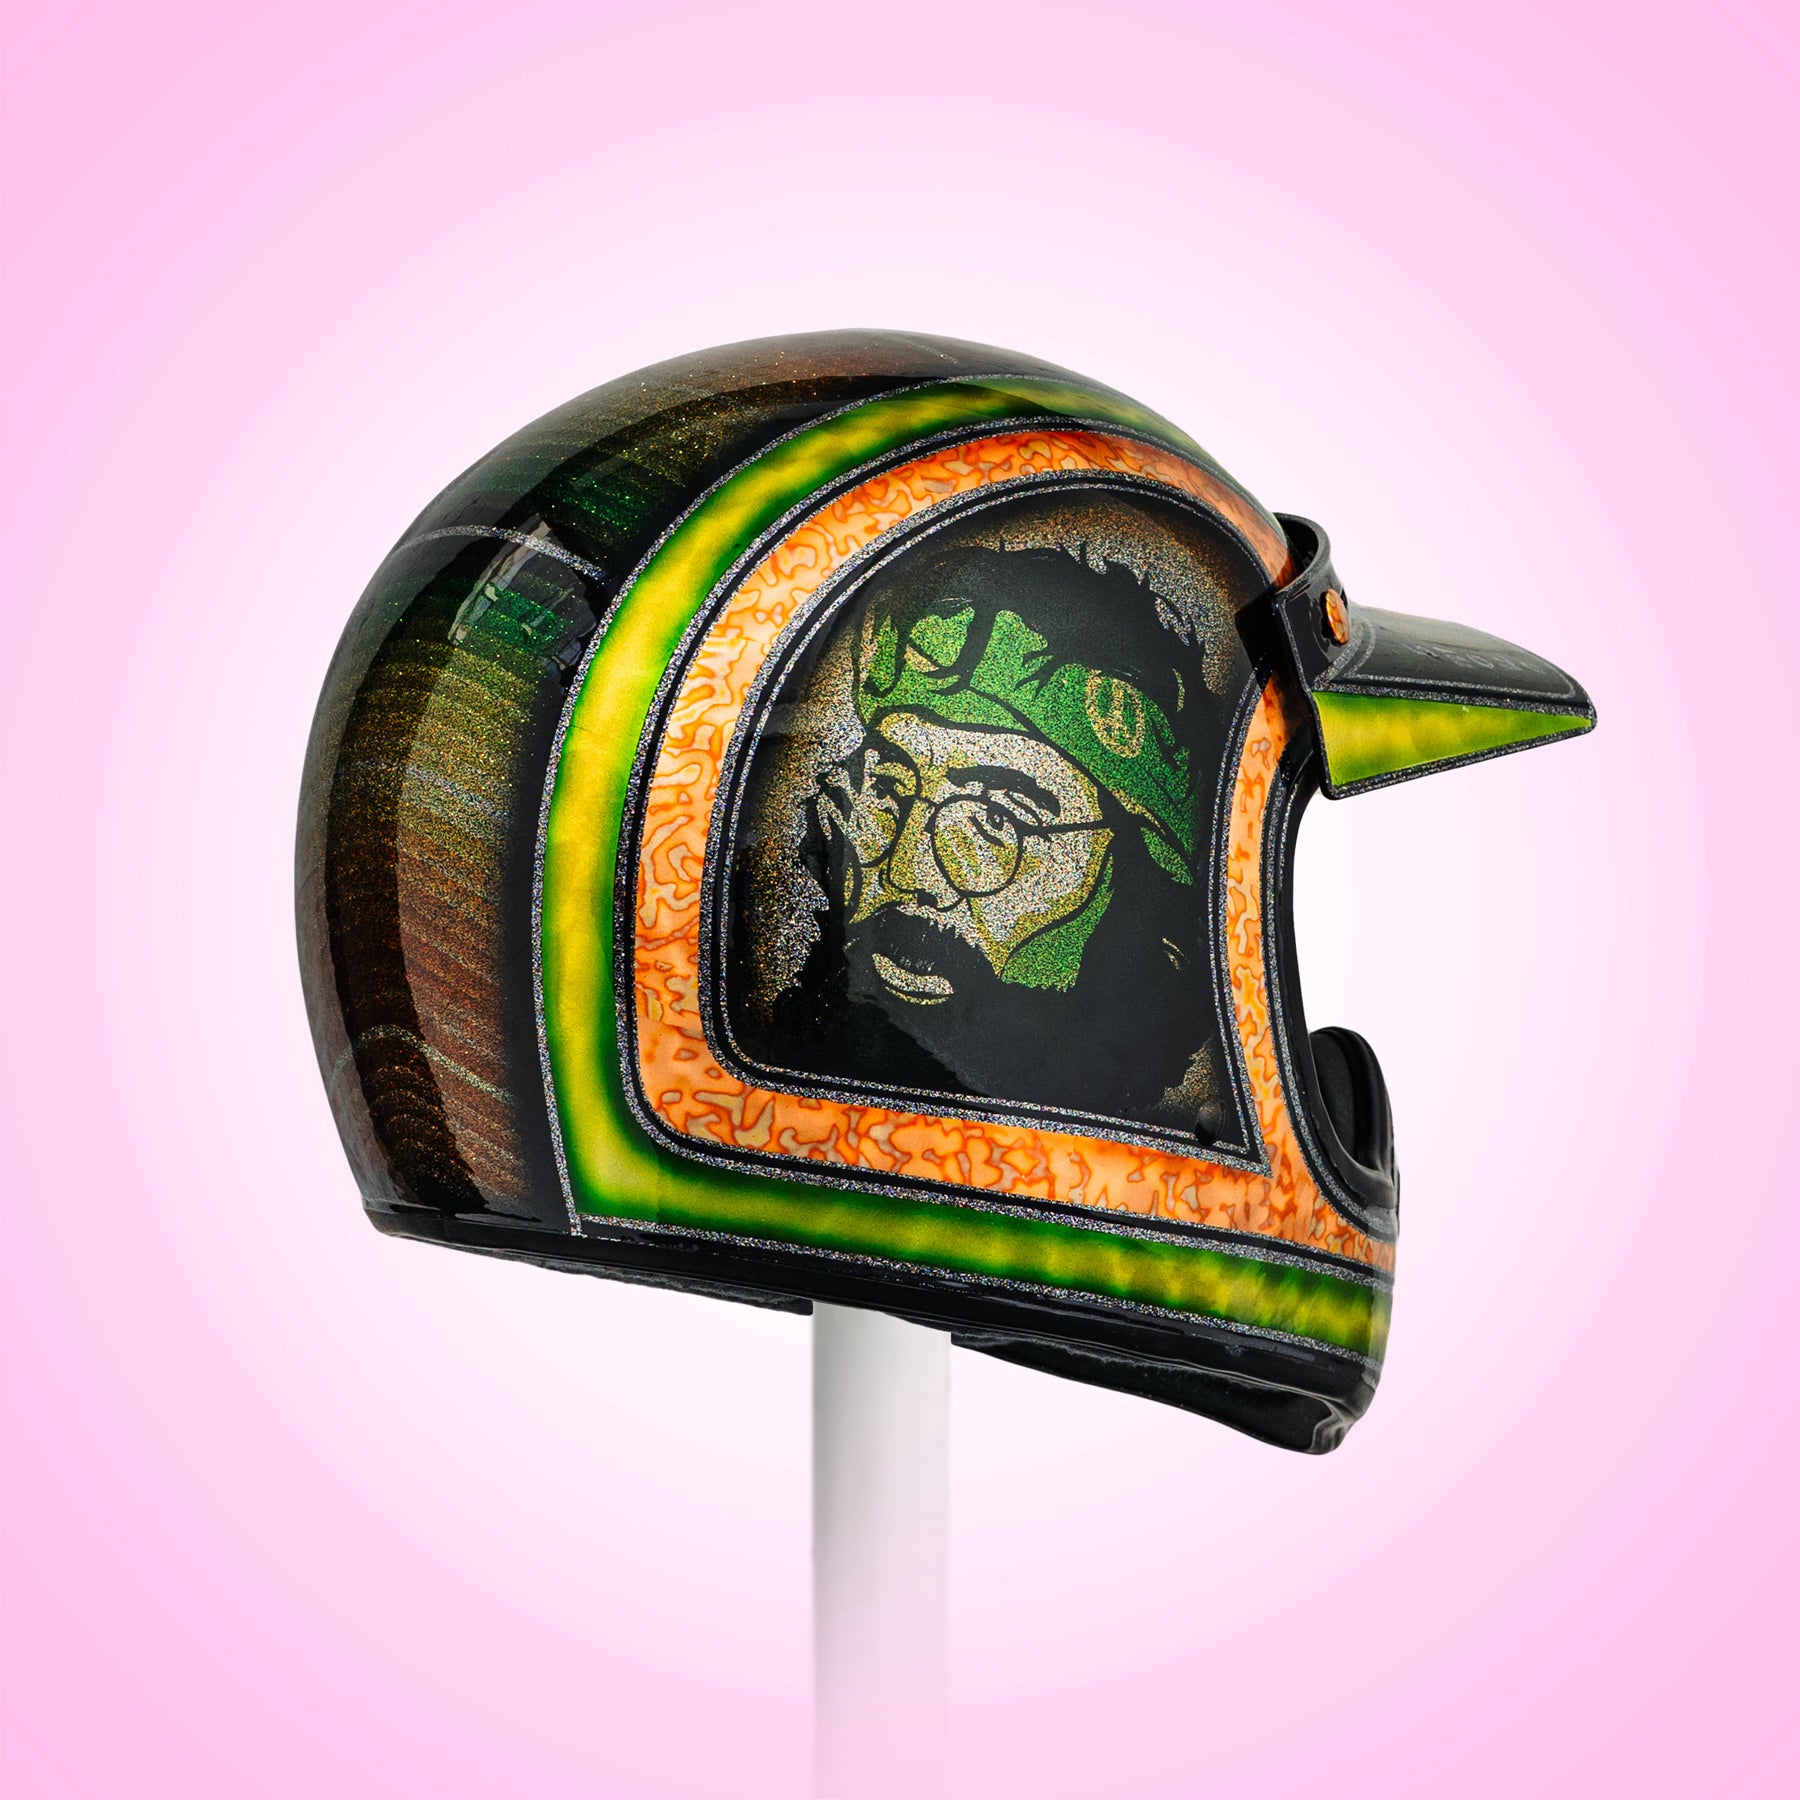 Trippy Ten Helmet Art Show Glory Daze Pittsburgh Adam Paul